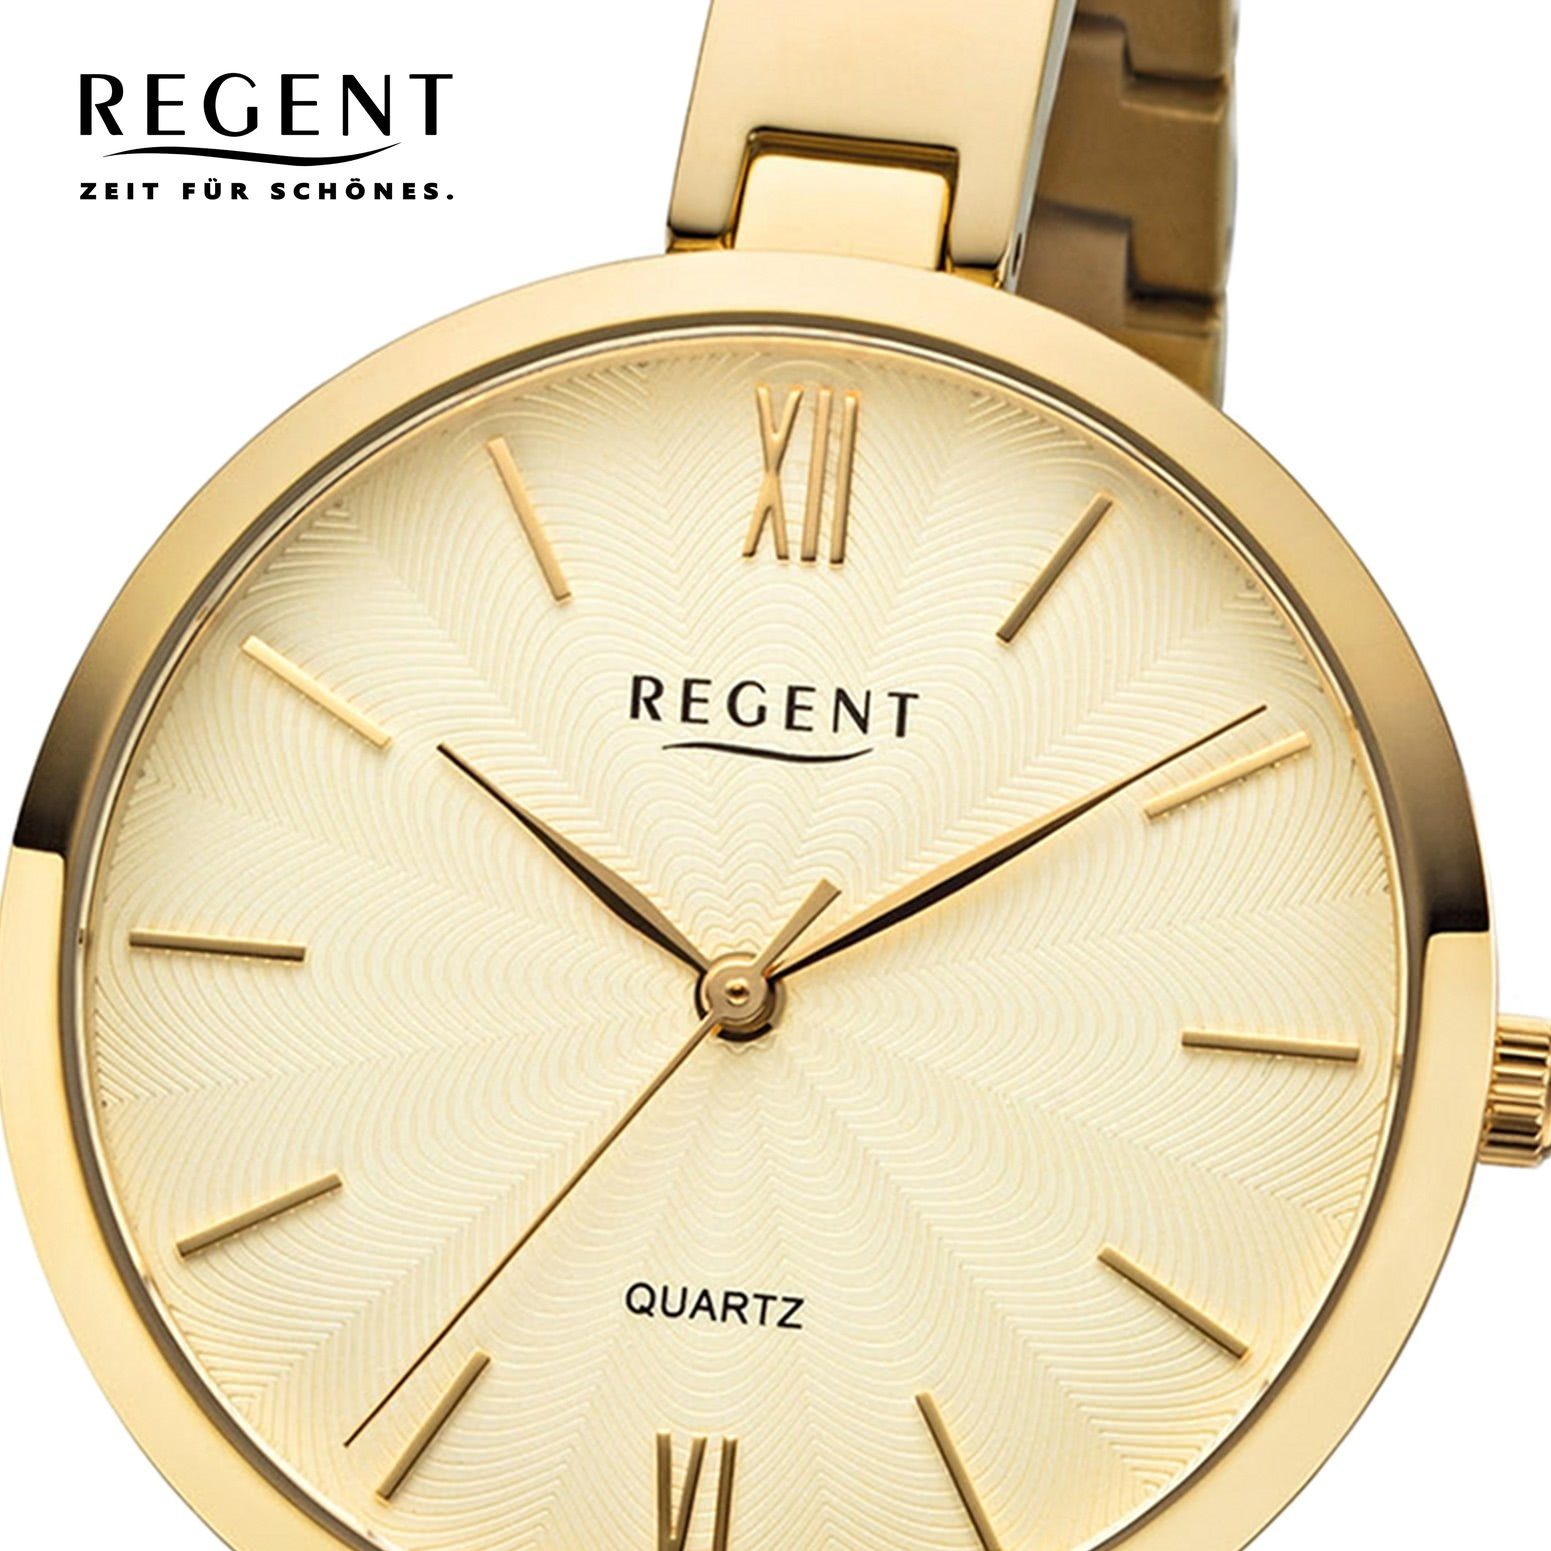 Regent Quarzuhr Regent Damen 34mm), Armbanduhr rund, Uhr (ca. Metall F-1146 mittel Metallarmband Damen Quarzwerk